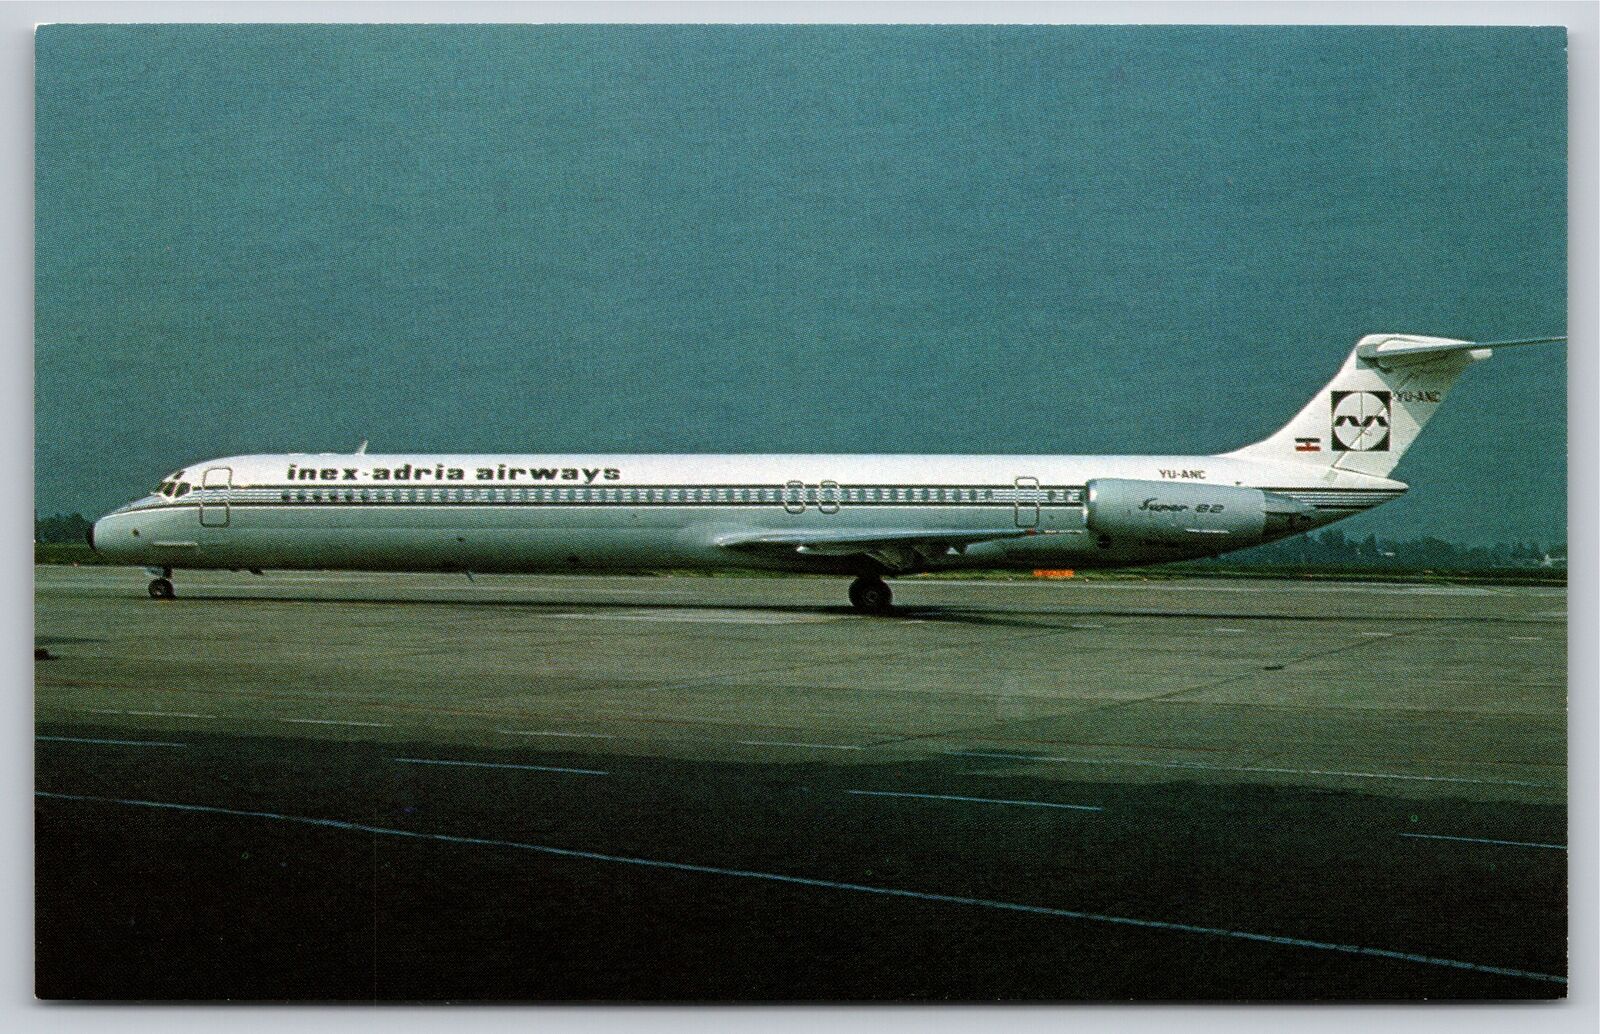 Transportation~Plane~Inex-Adria Airways Super 80~Vintage Postcard